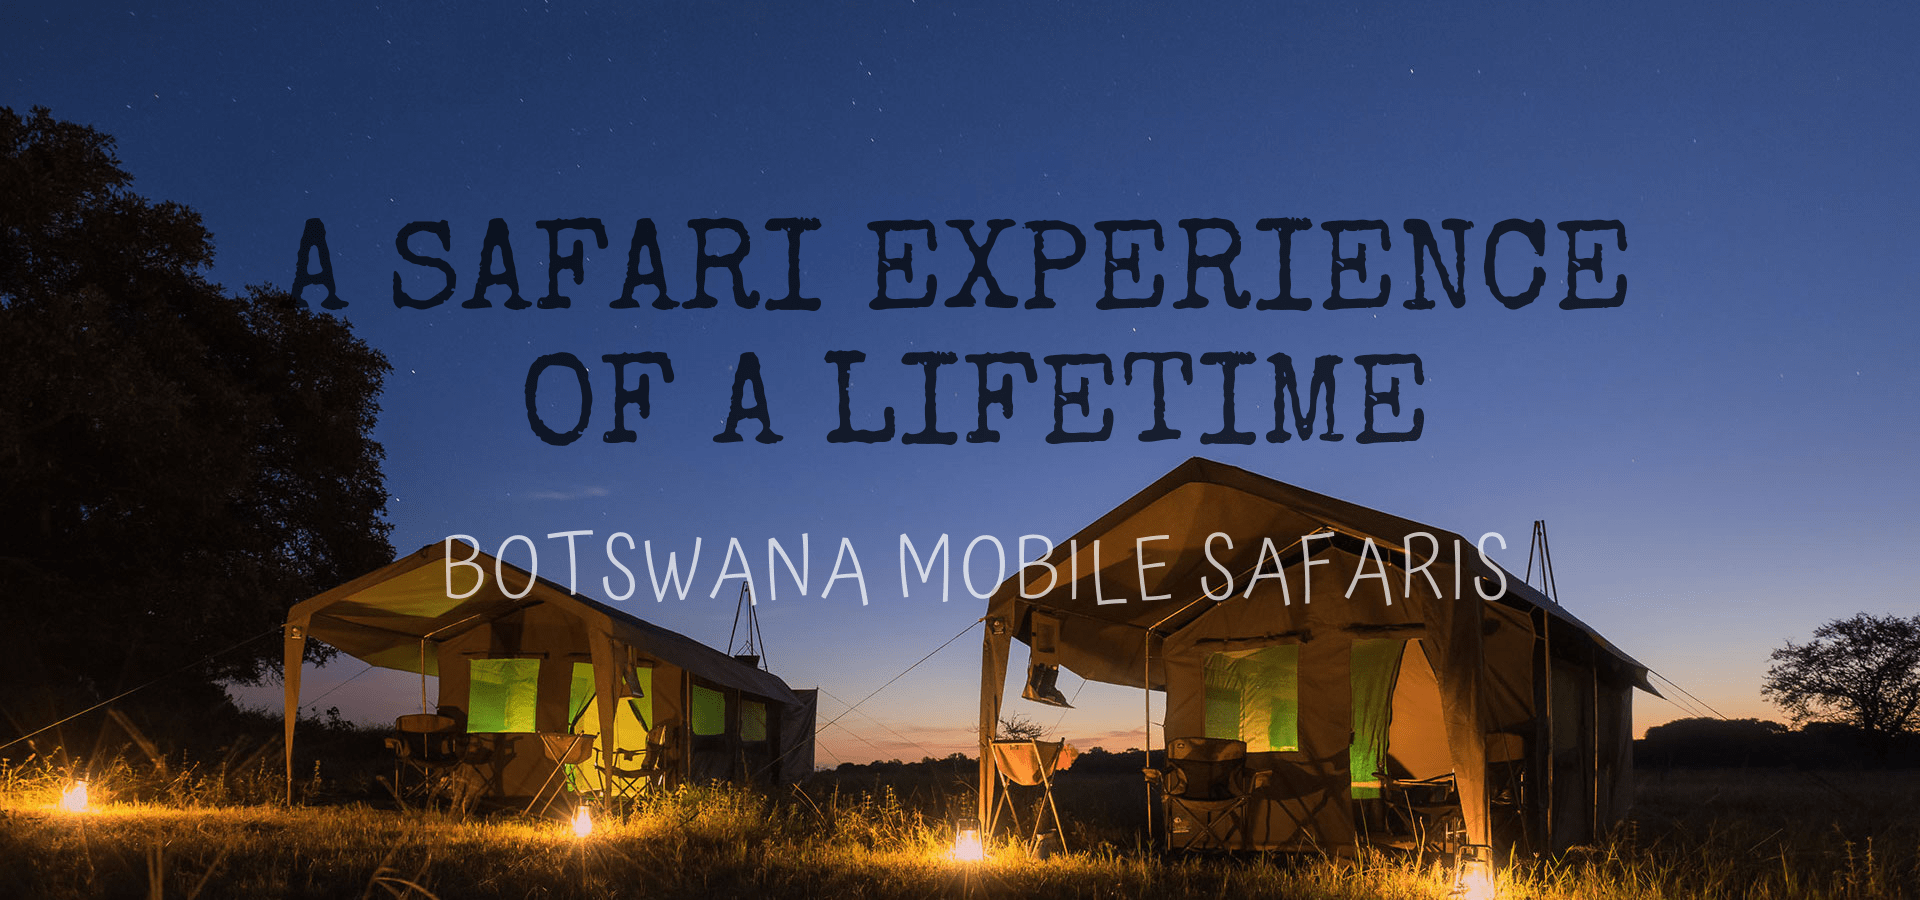 Botswana mobile safaris